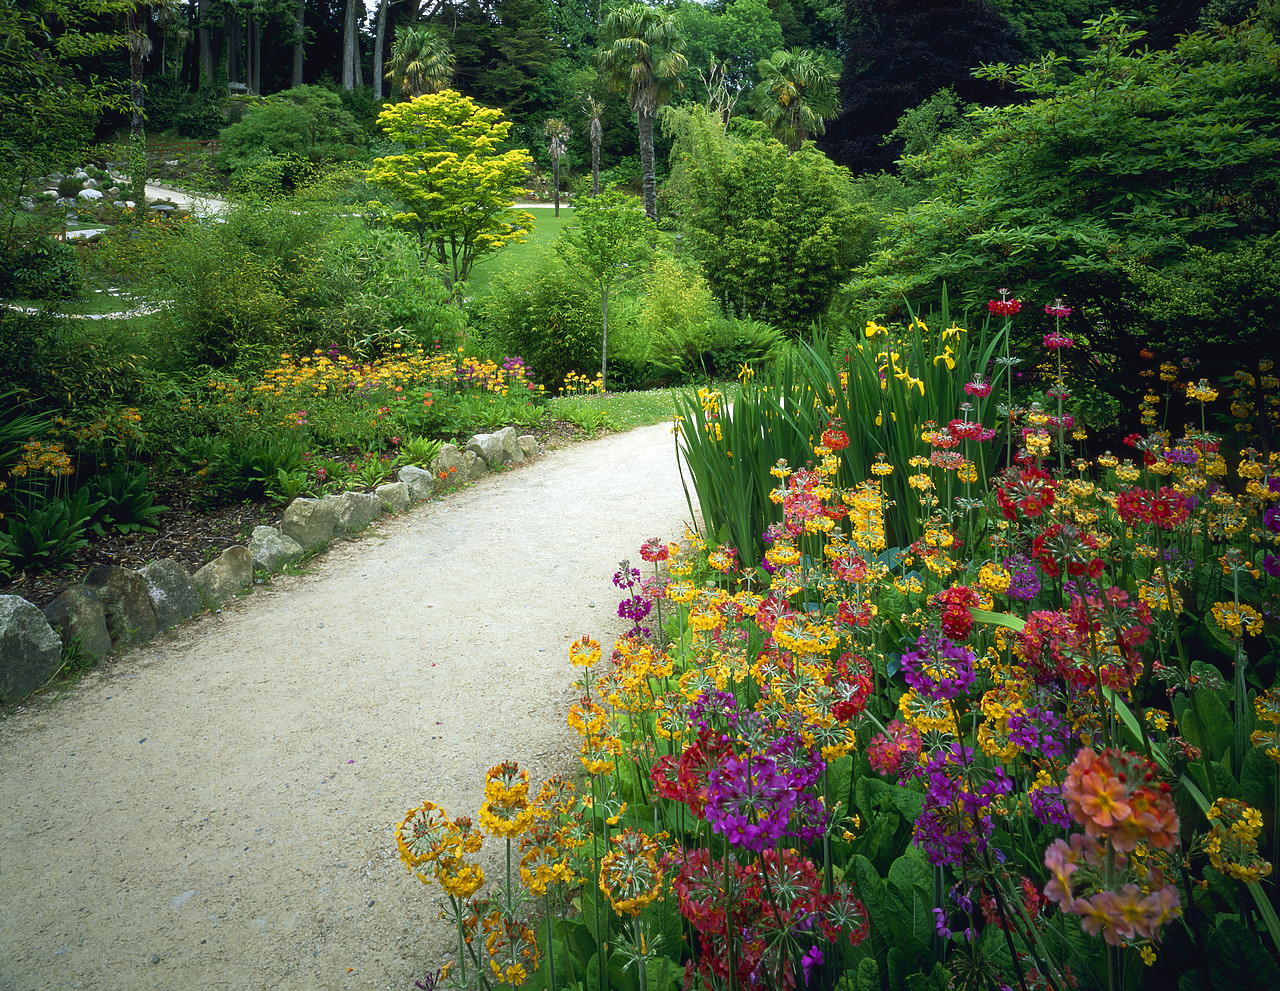 #030289-1 - Primulas along Garden Path, Powerscourt Gardens, Co. Wicklow, Ireland